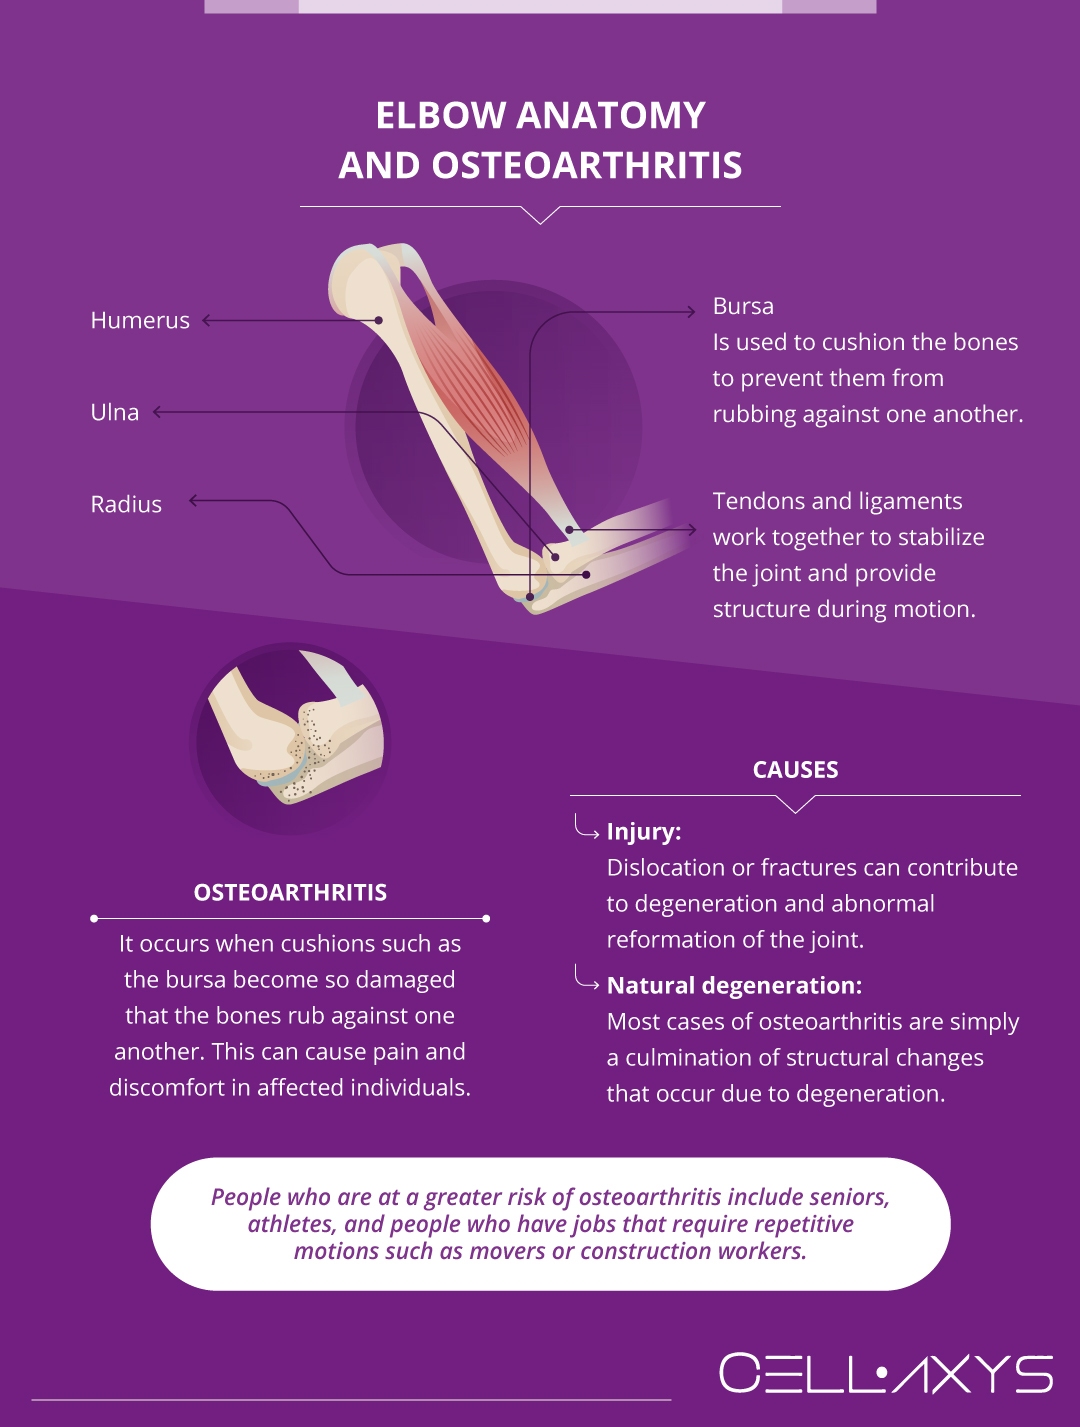 Elbow Anatomy and Osteoarthritis